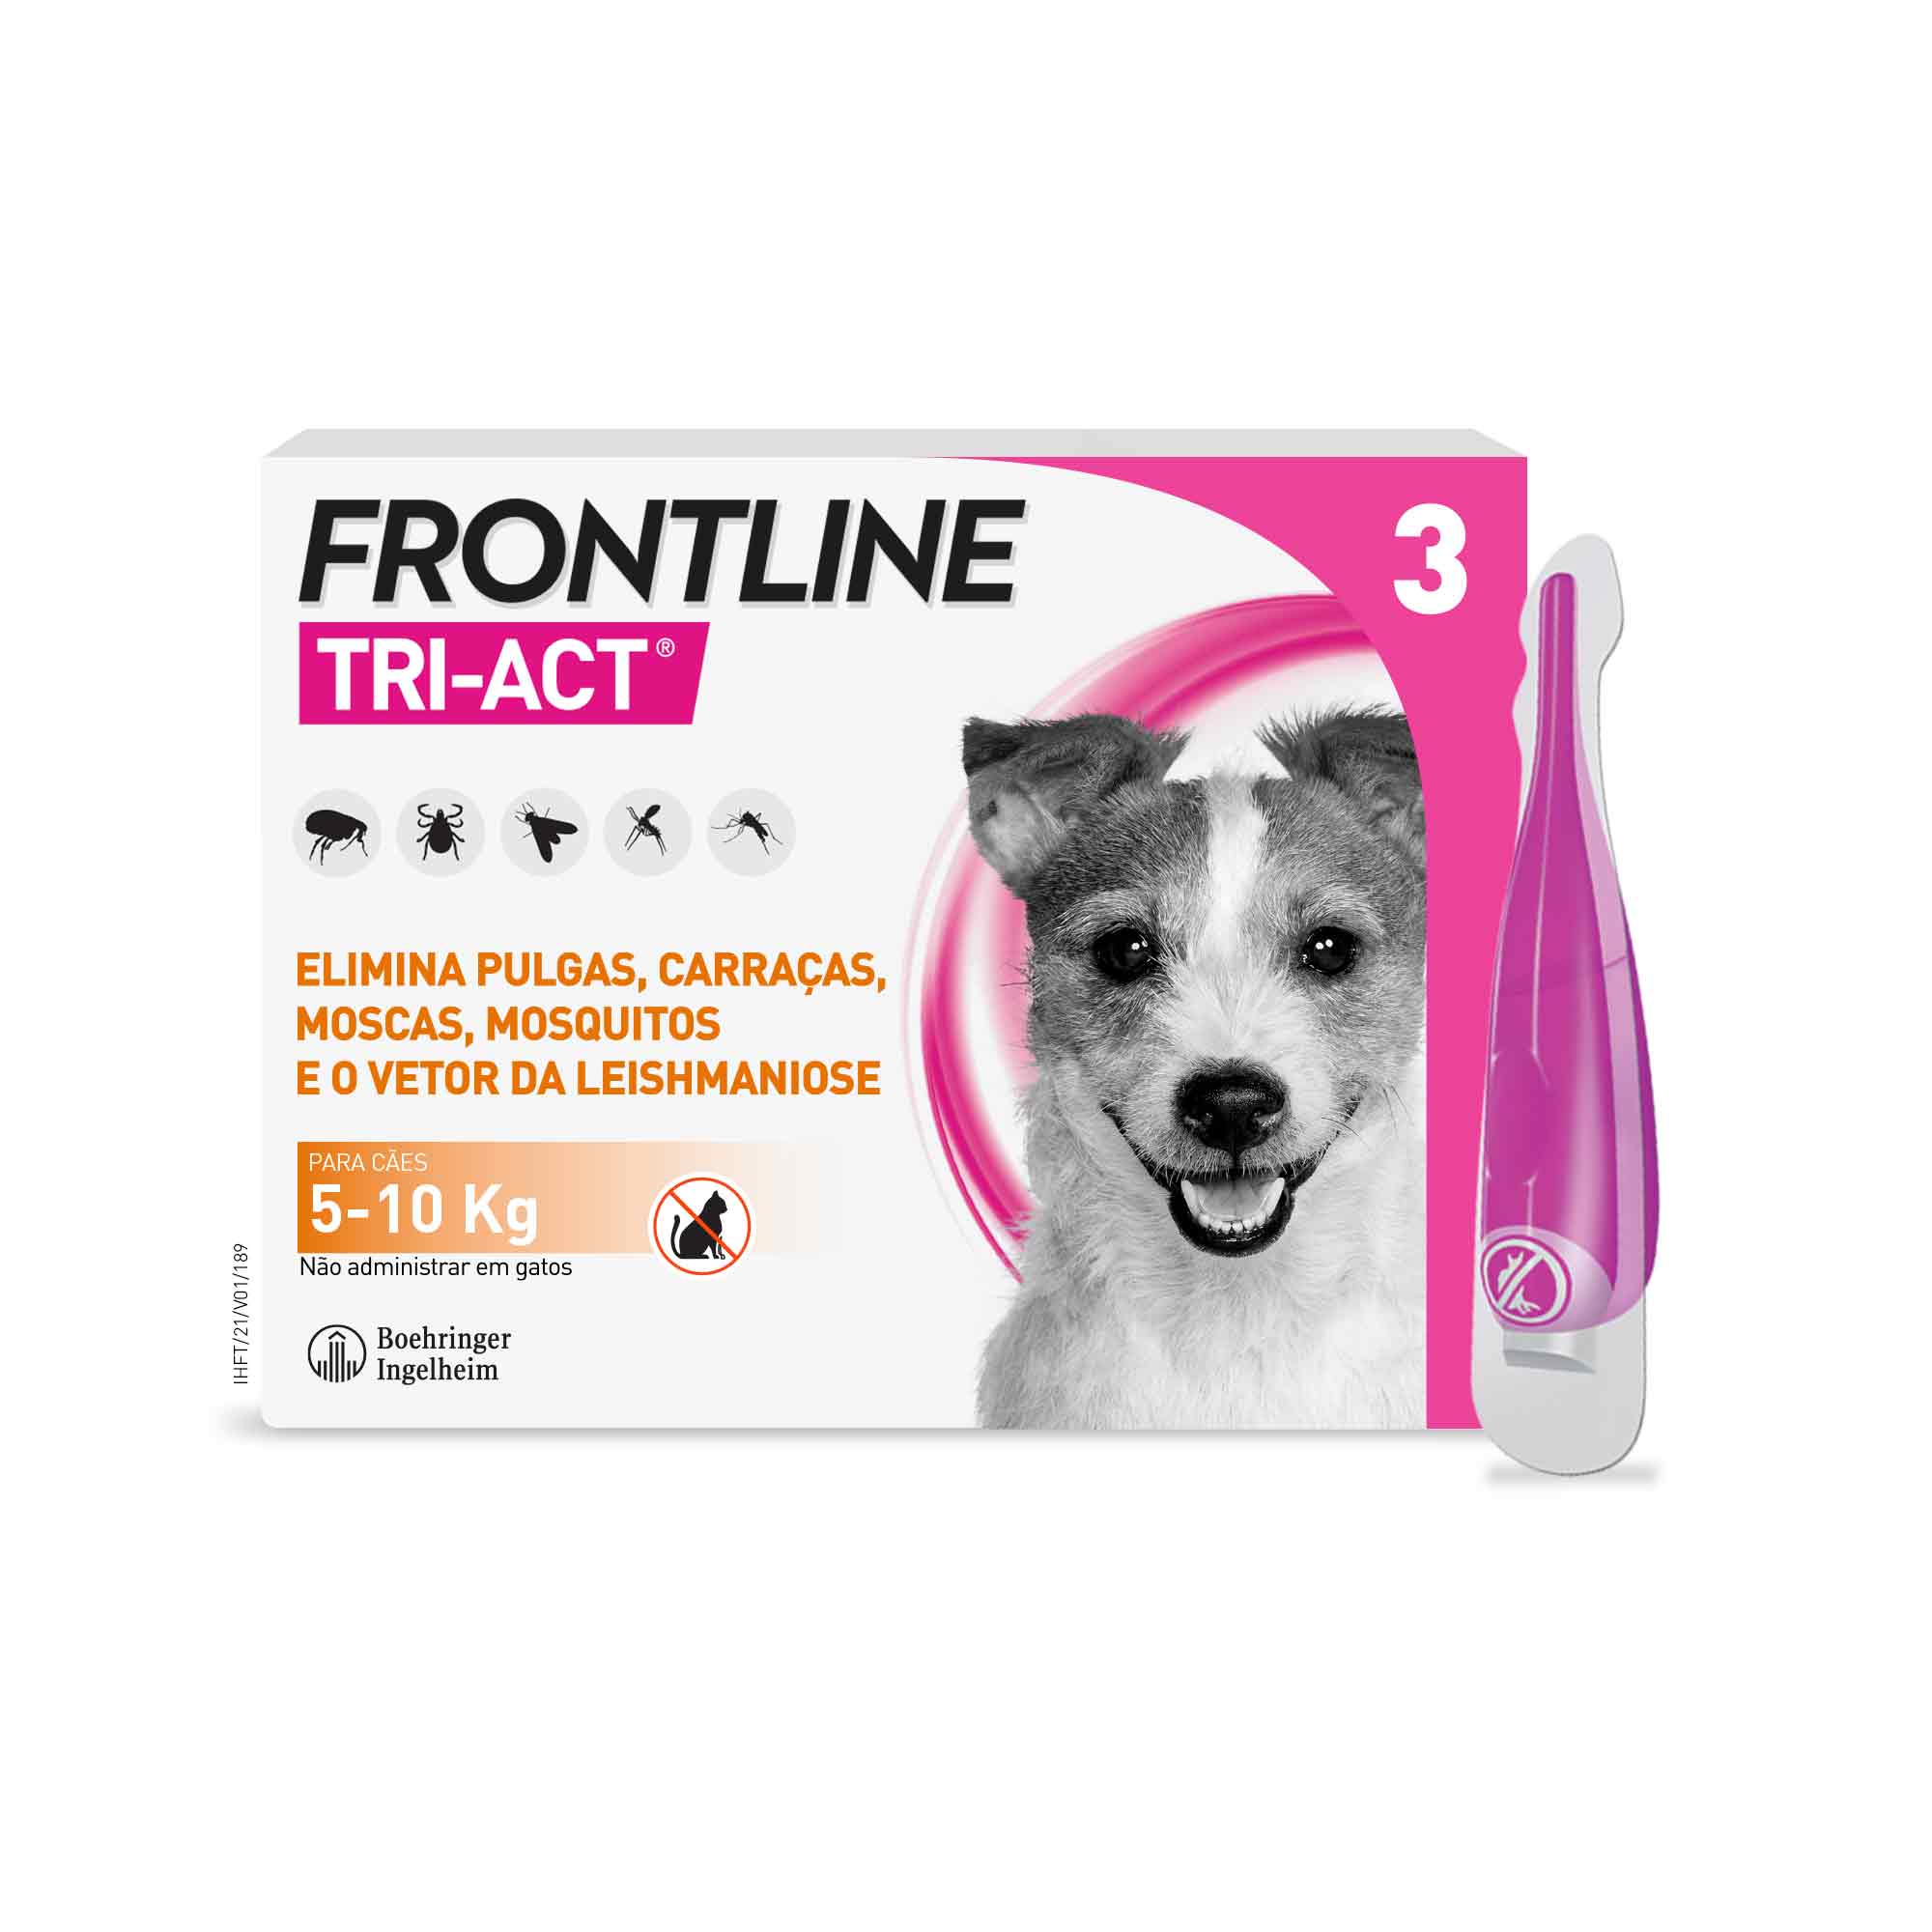 FRONTLINE TRI-ACT CÃO 5-10 KG X 3